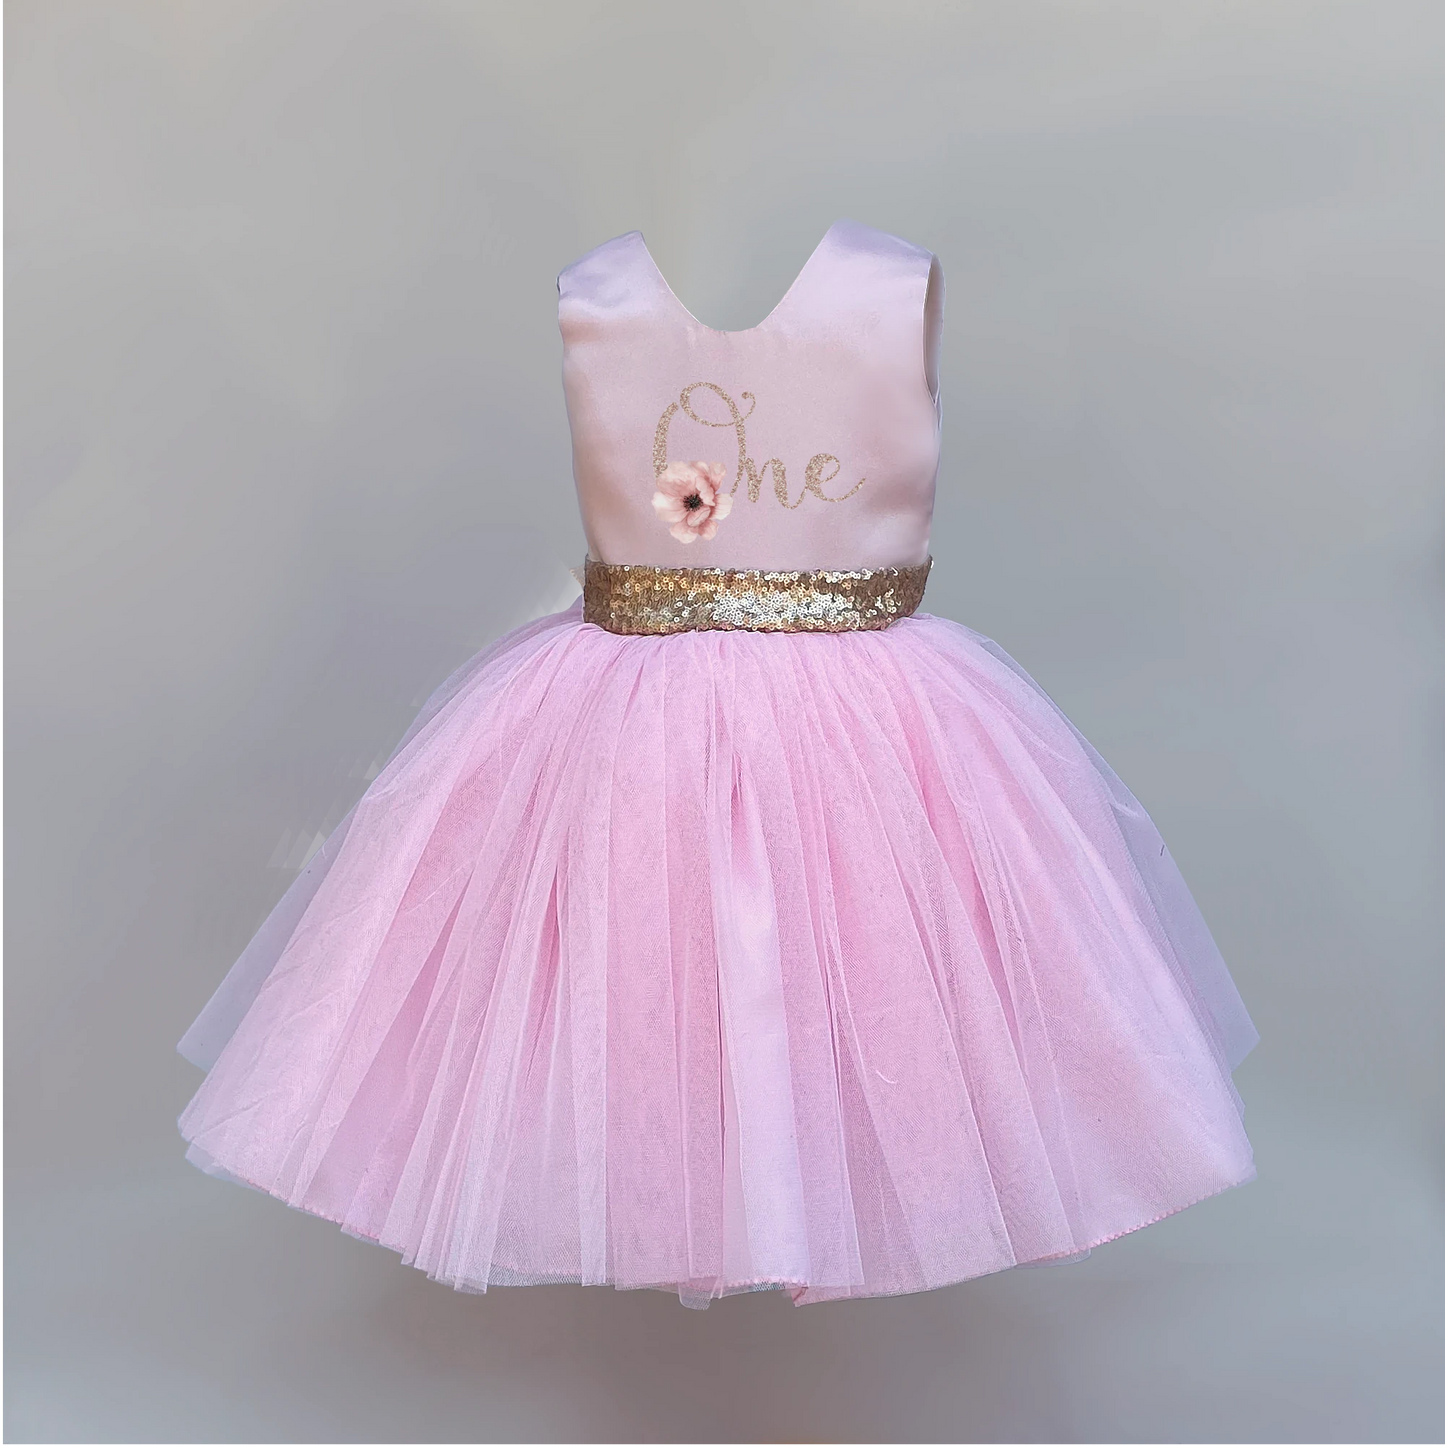 First birthday tutu dress - Sale